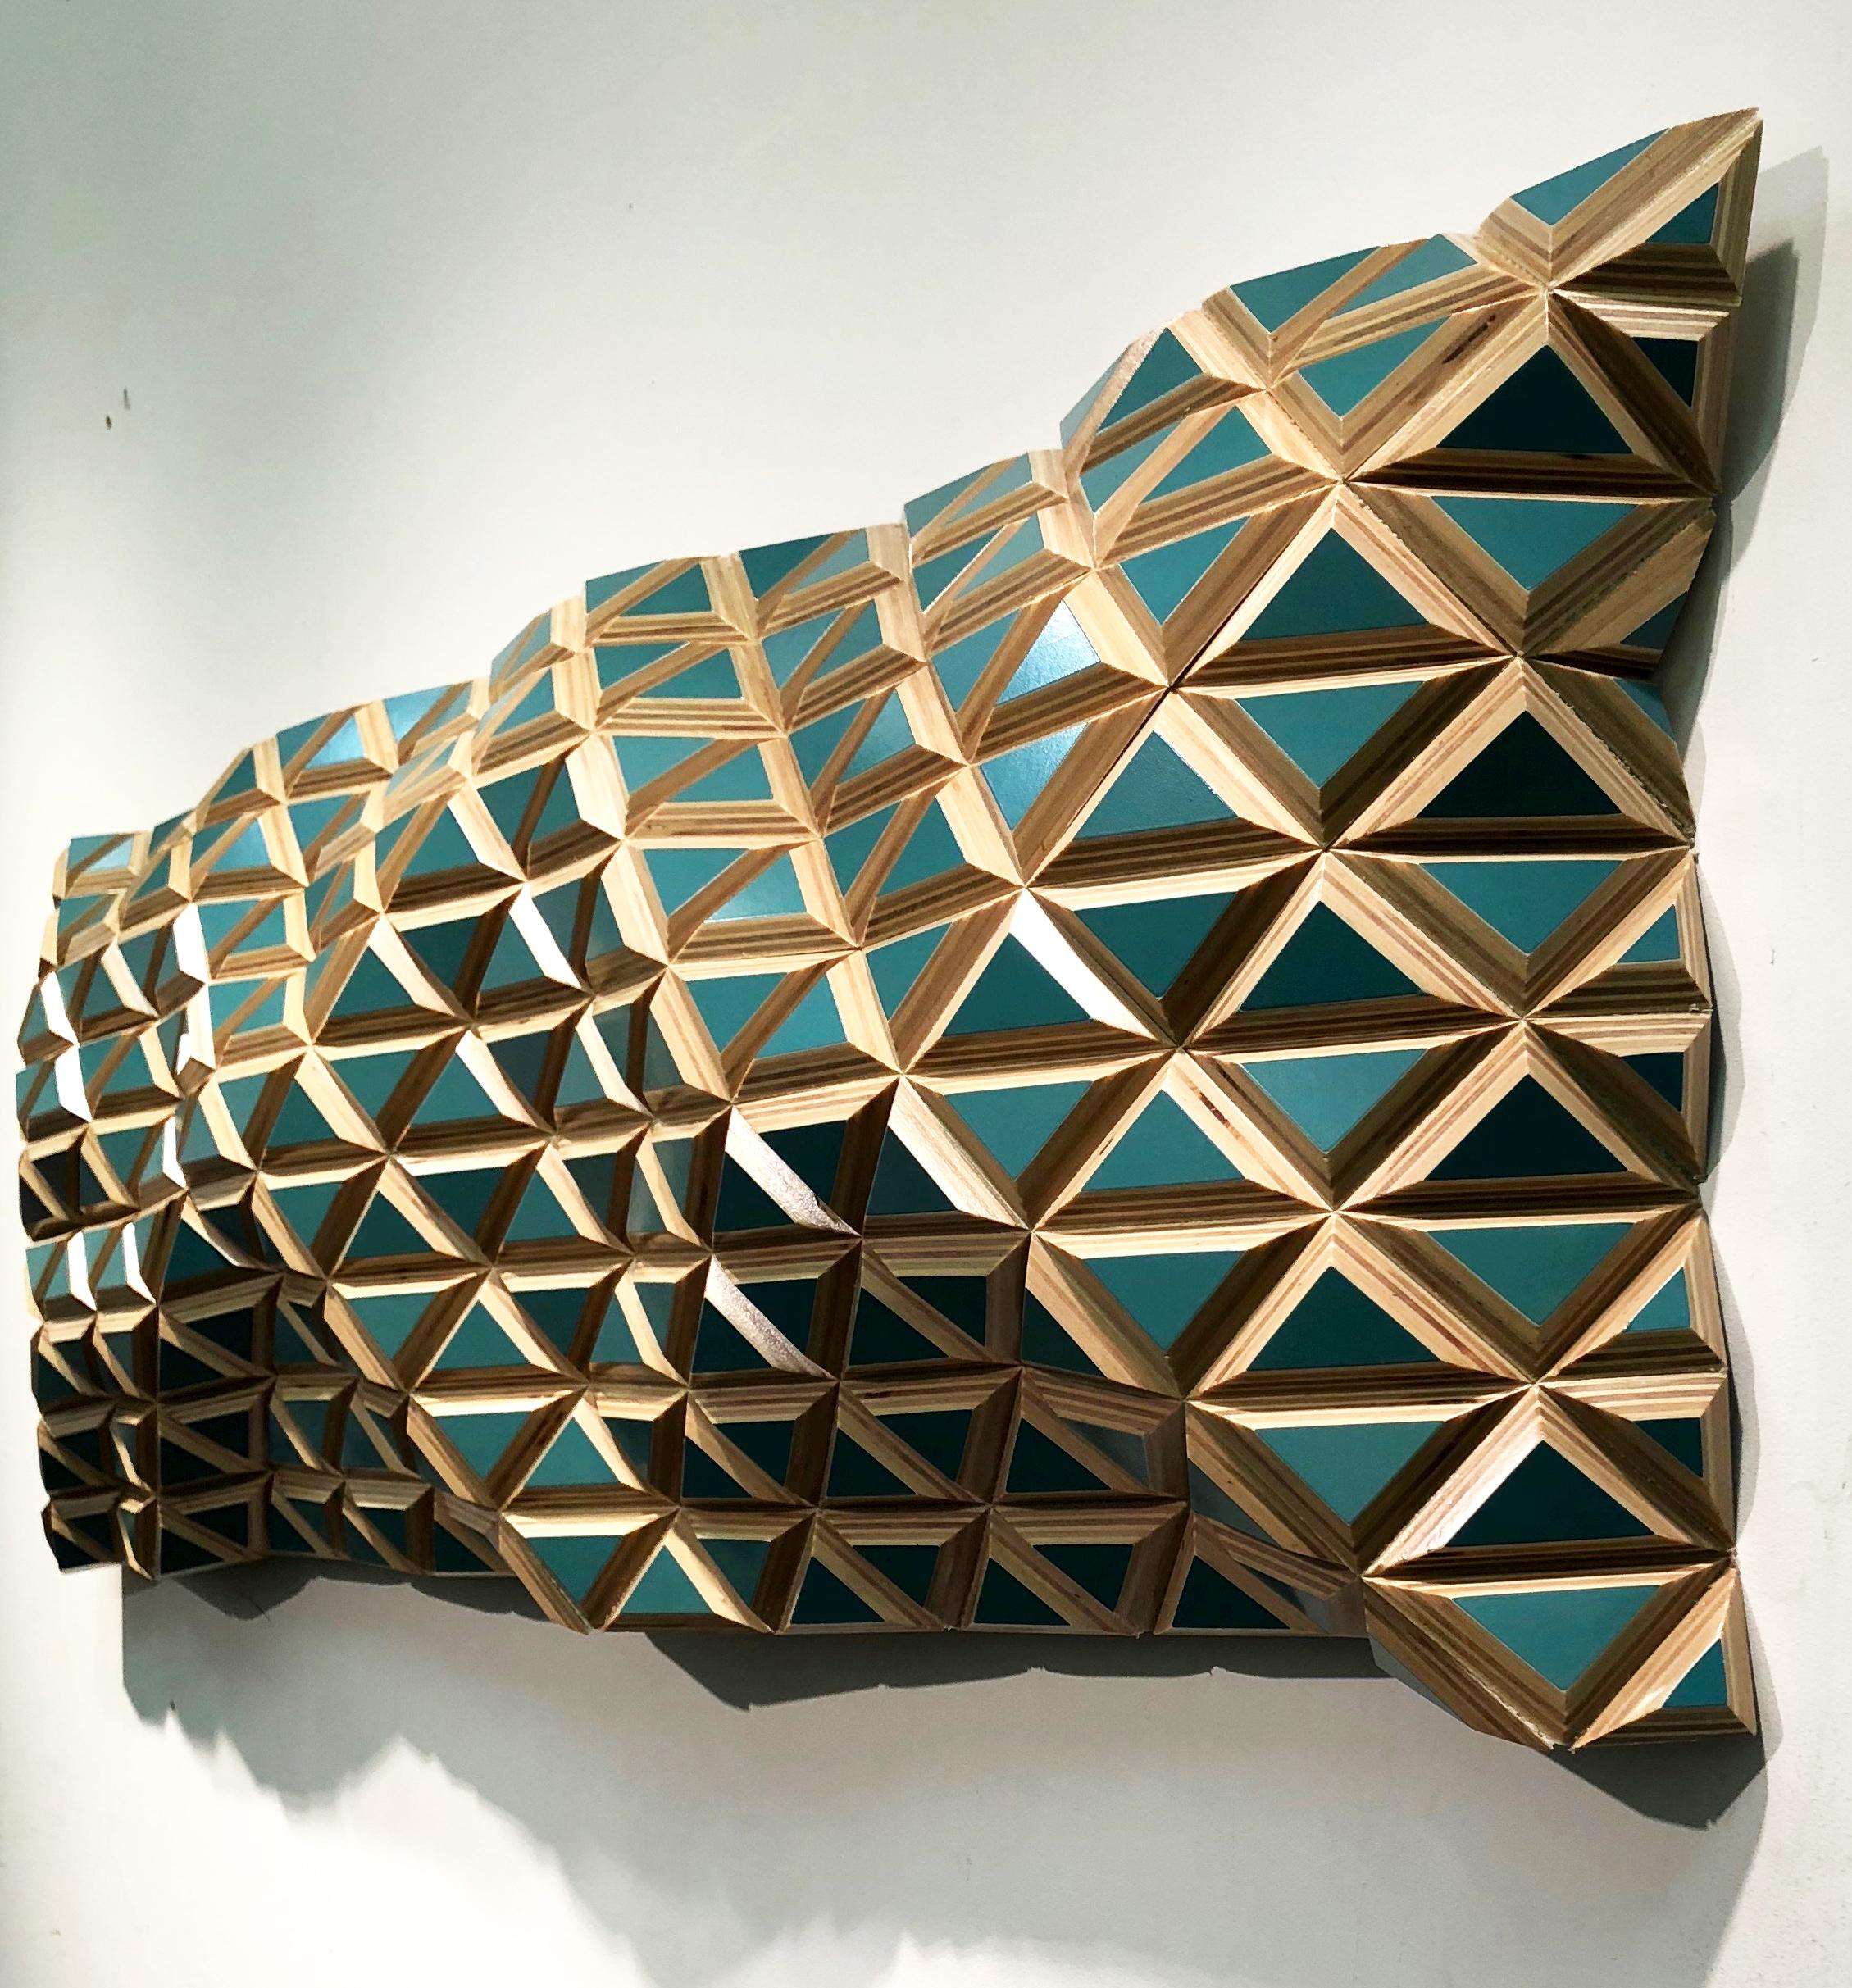 The Chameleon Effect - Flexible Rigids - sculptural wall, parametric design  - Sculpture by Hugo Garcia-Urrutia